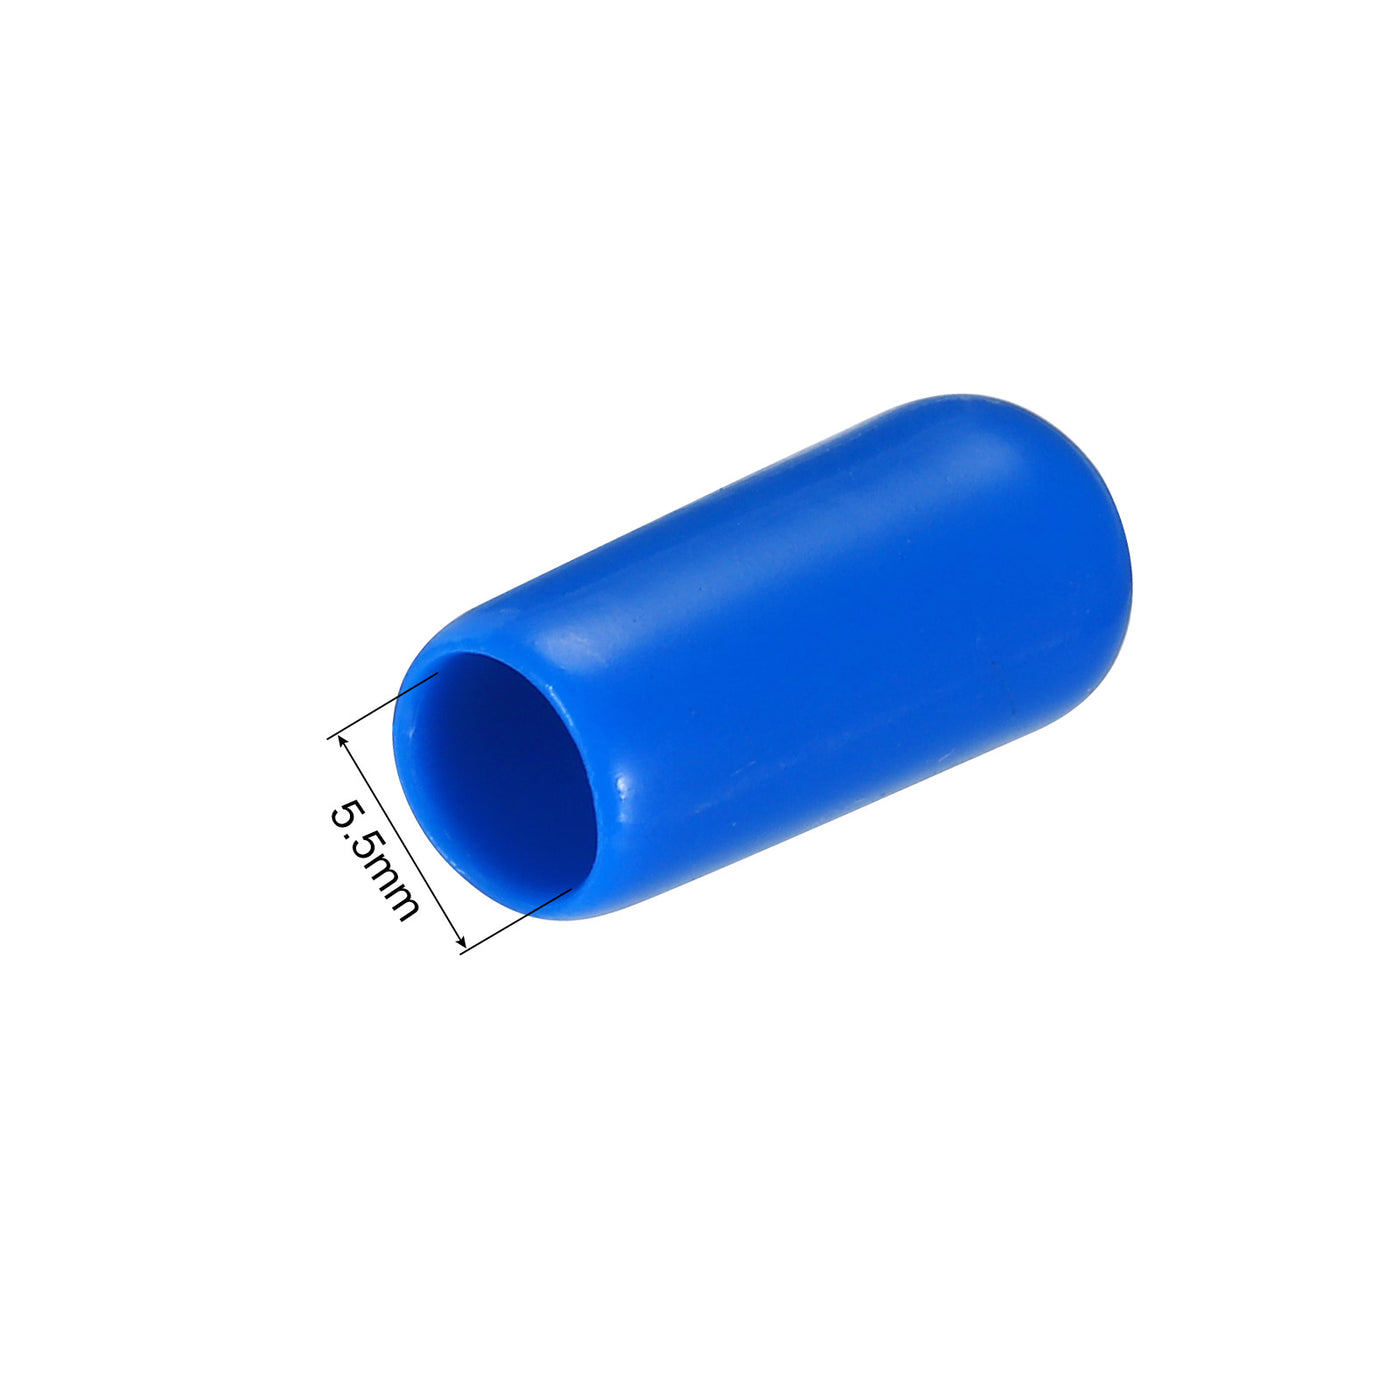 uxcell Uxcell 50pcs Rubber End Caps 5.5mm ID Vinyl PVC Round Tube Bolt Cap Cover Screw Thread Protectors Blue